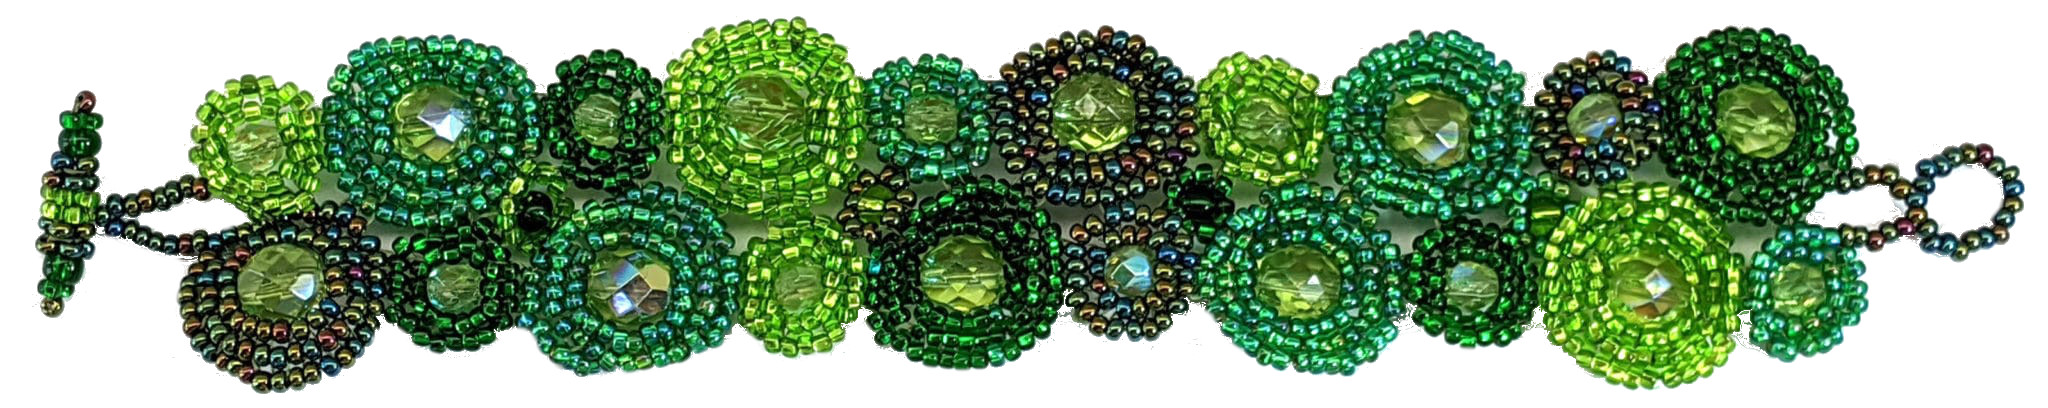 Greens Circles Beaded Bracelet